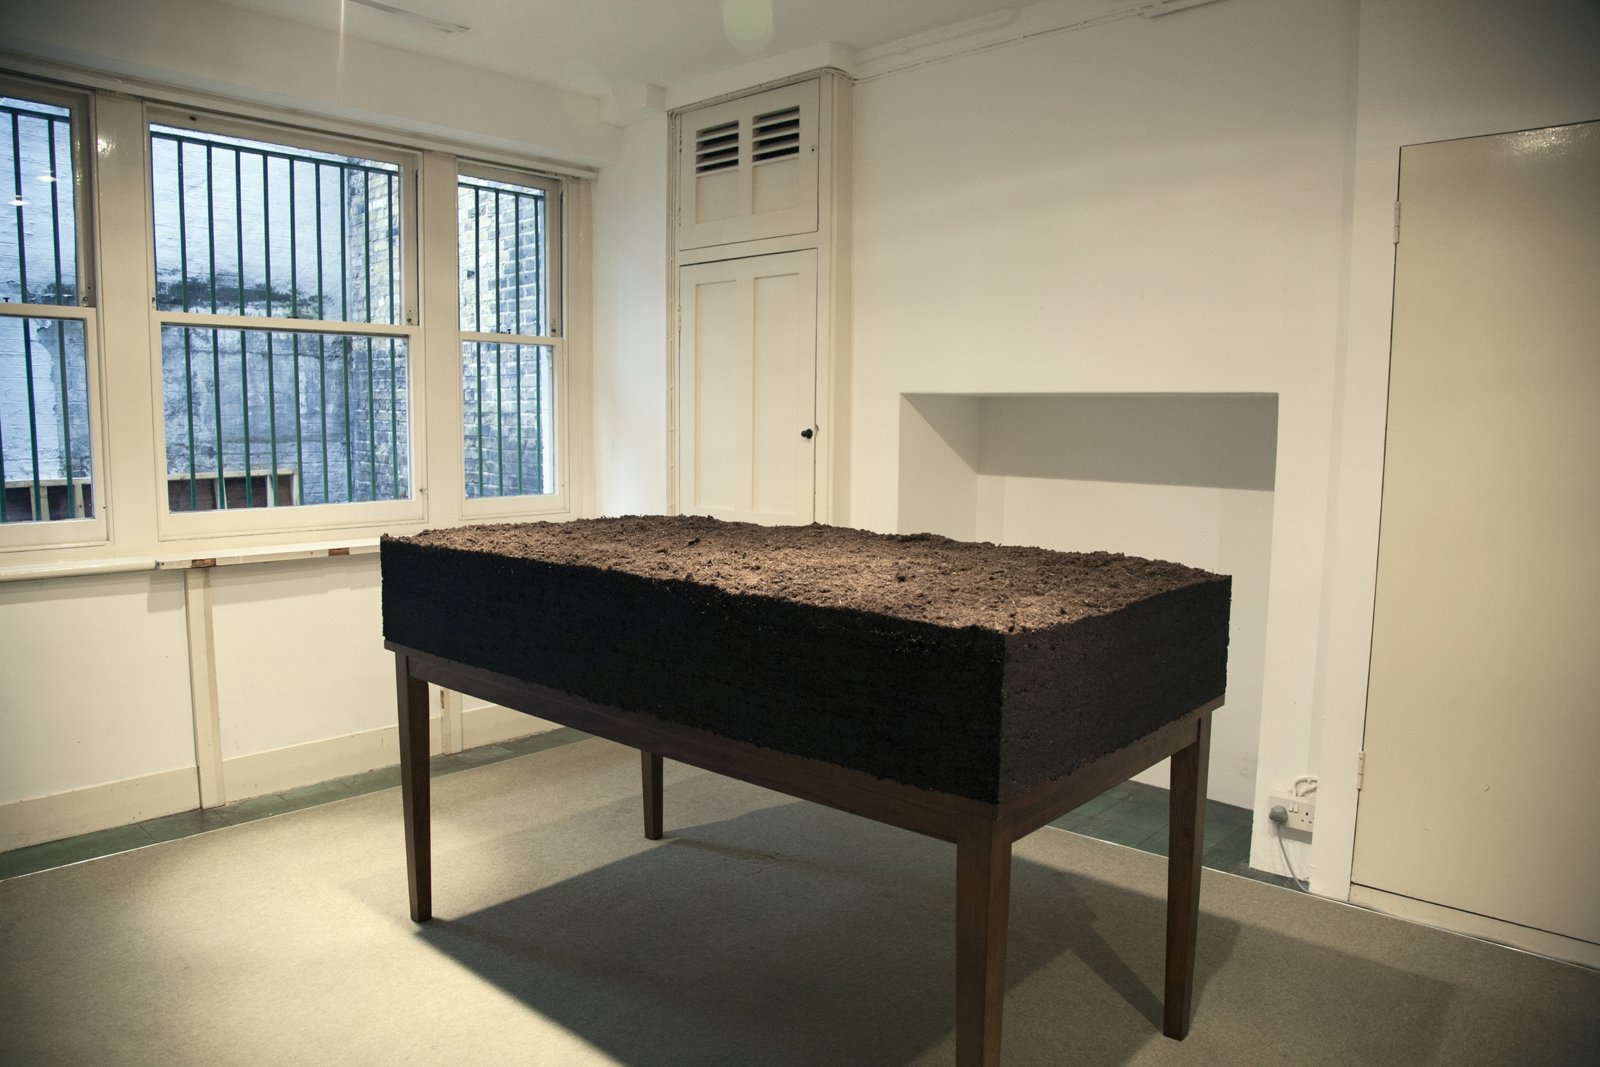 Abbas Akhavan, Dirt/Table, 2012, topsoil, water, wooden table, 42 x 36 x 72 in. (106 x 91 x 182 cm). Installation view, Study for a Garden, Delfina Foundation, London, UK, 2012